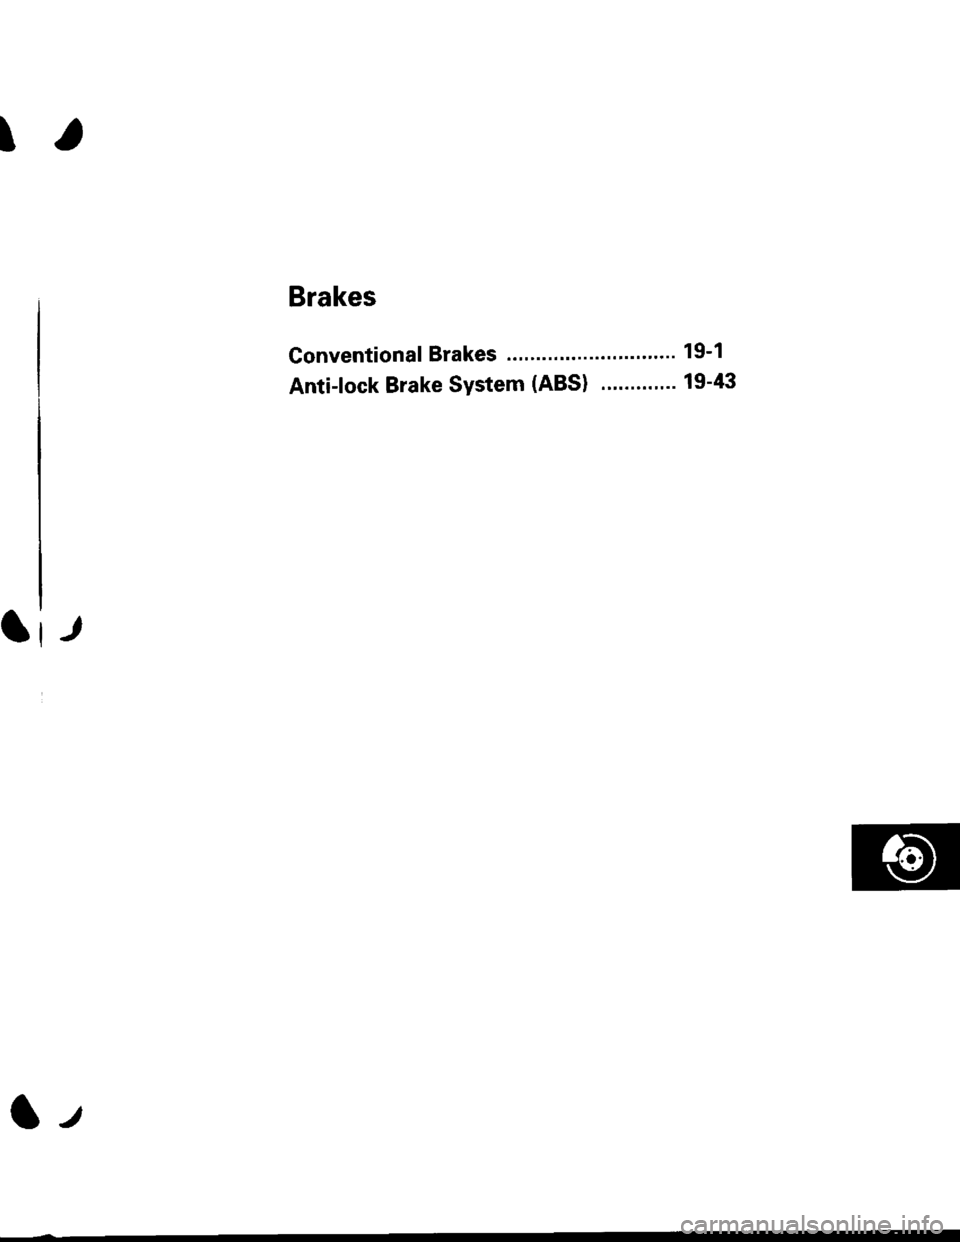 HONDA CIVIC 1997 6.G Workshop Manual t
Brakes
Conventional Brakes ..."... 19-1
Anti-lock Brake System (ABS) ."......".. 19-43
It-,
lt 